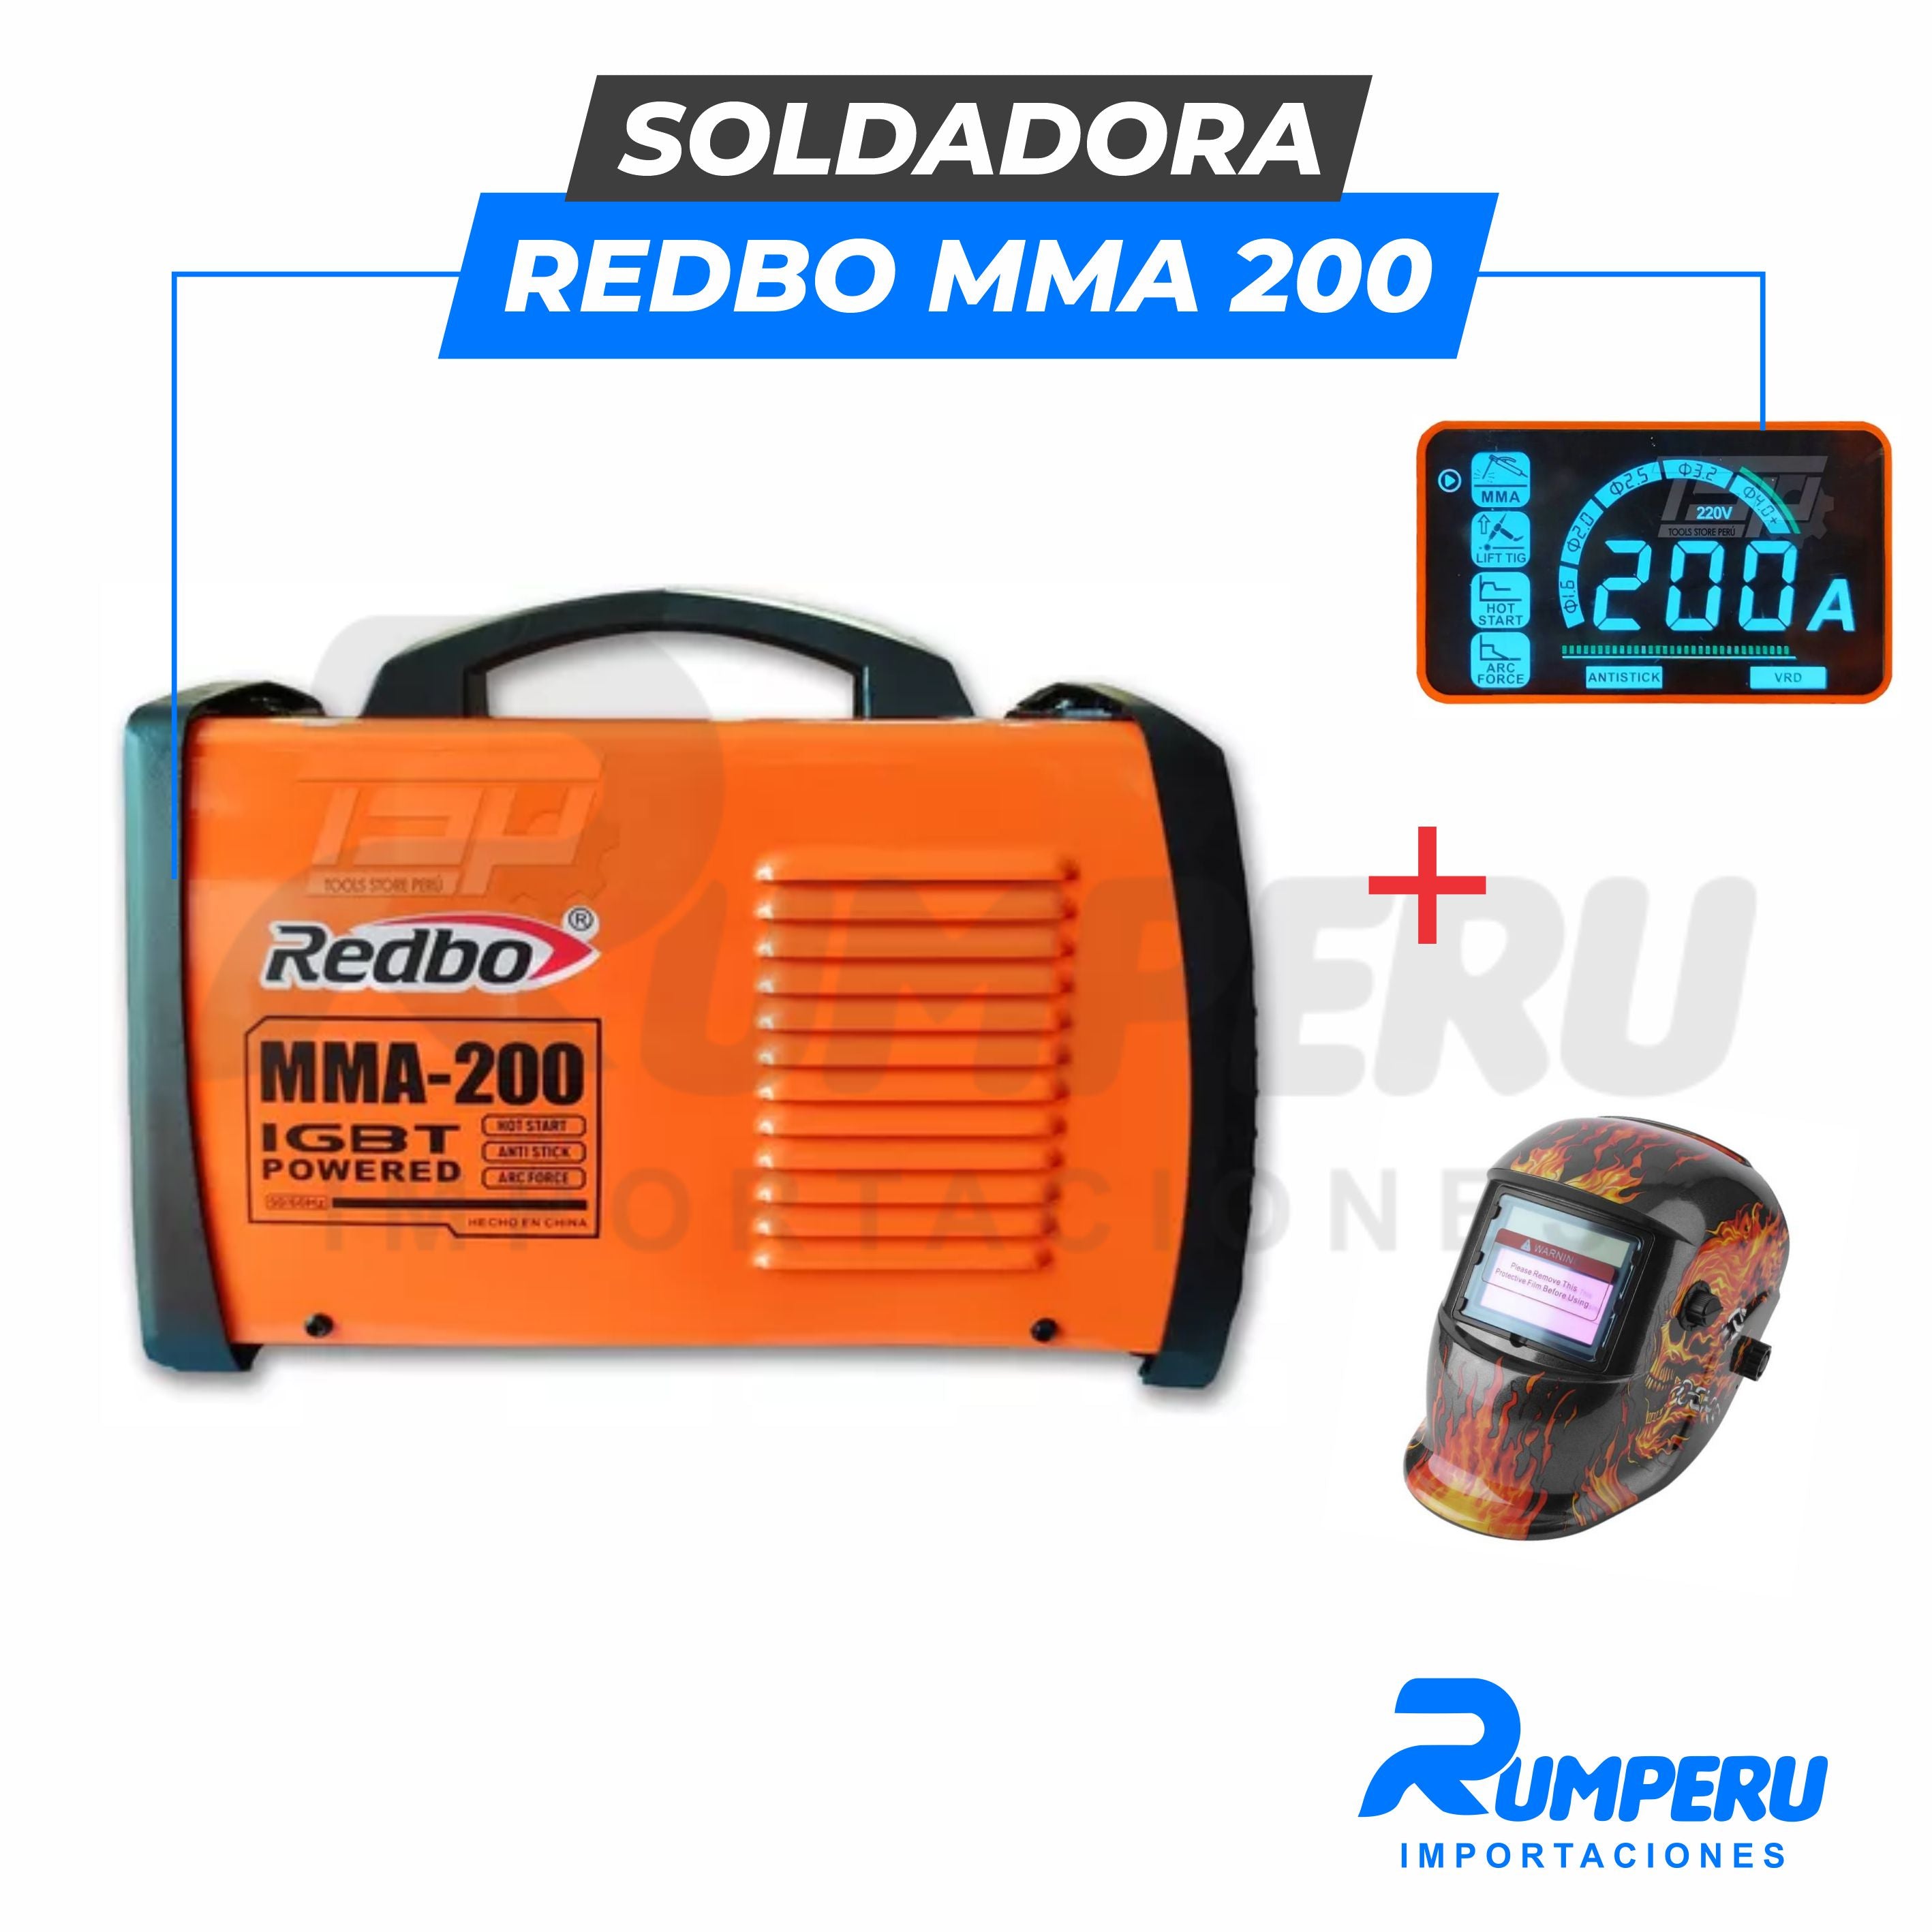 soldadora Redbo 200A + Mascara